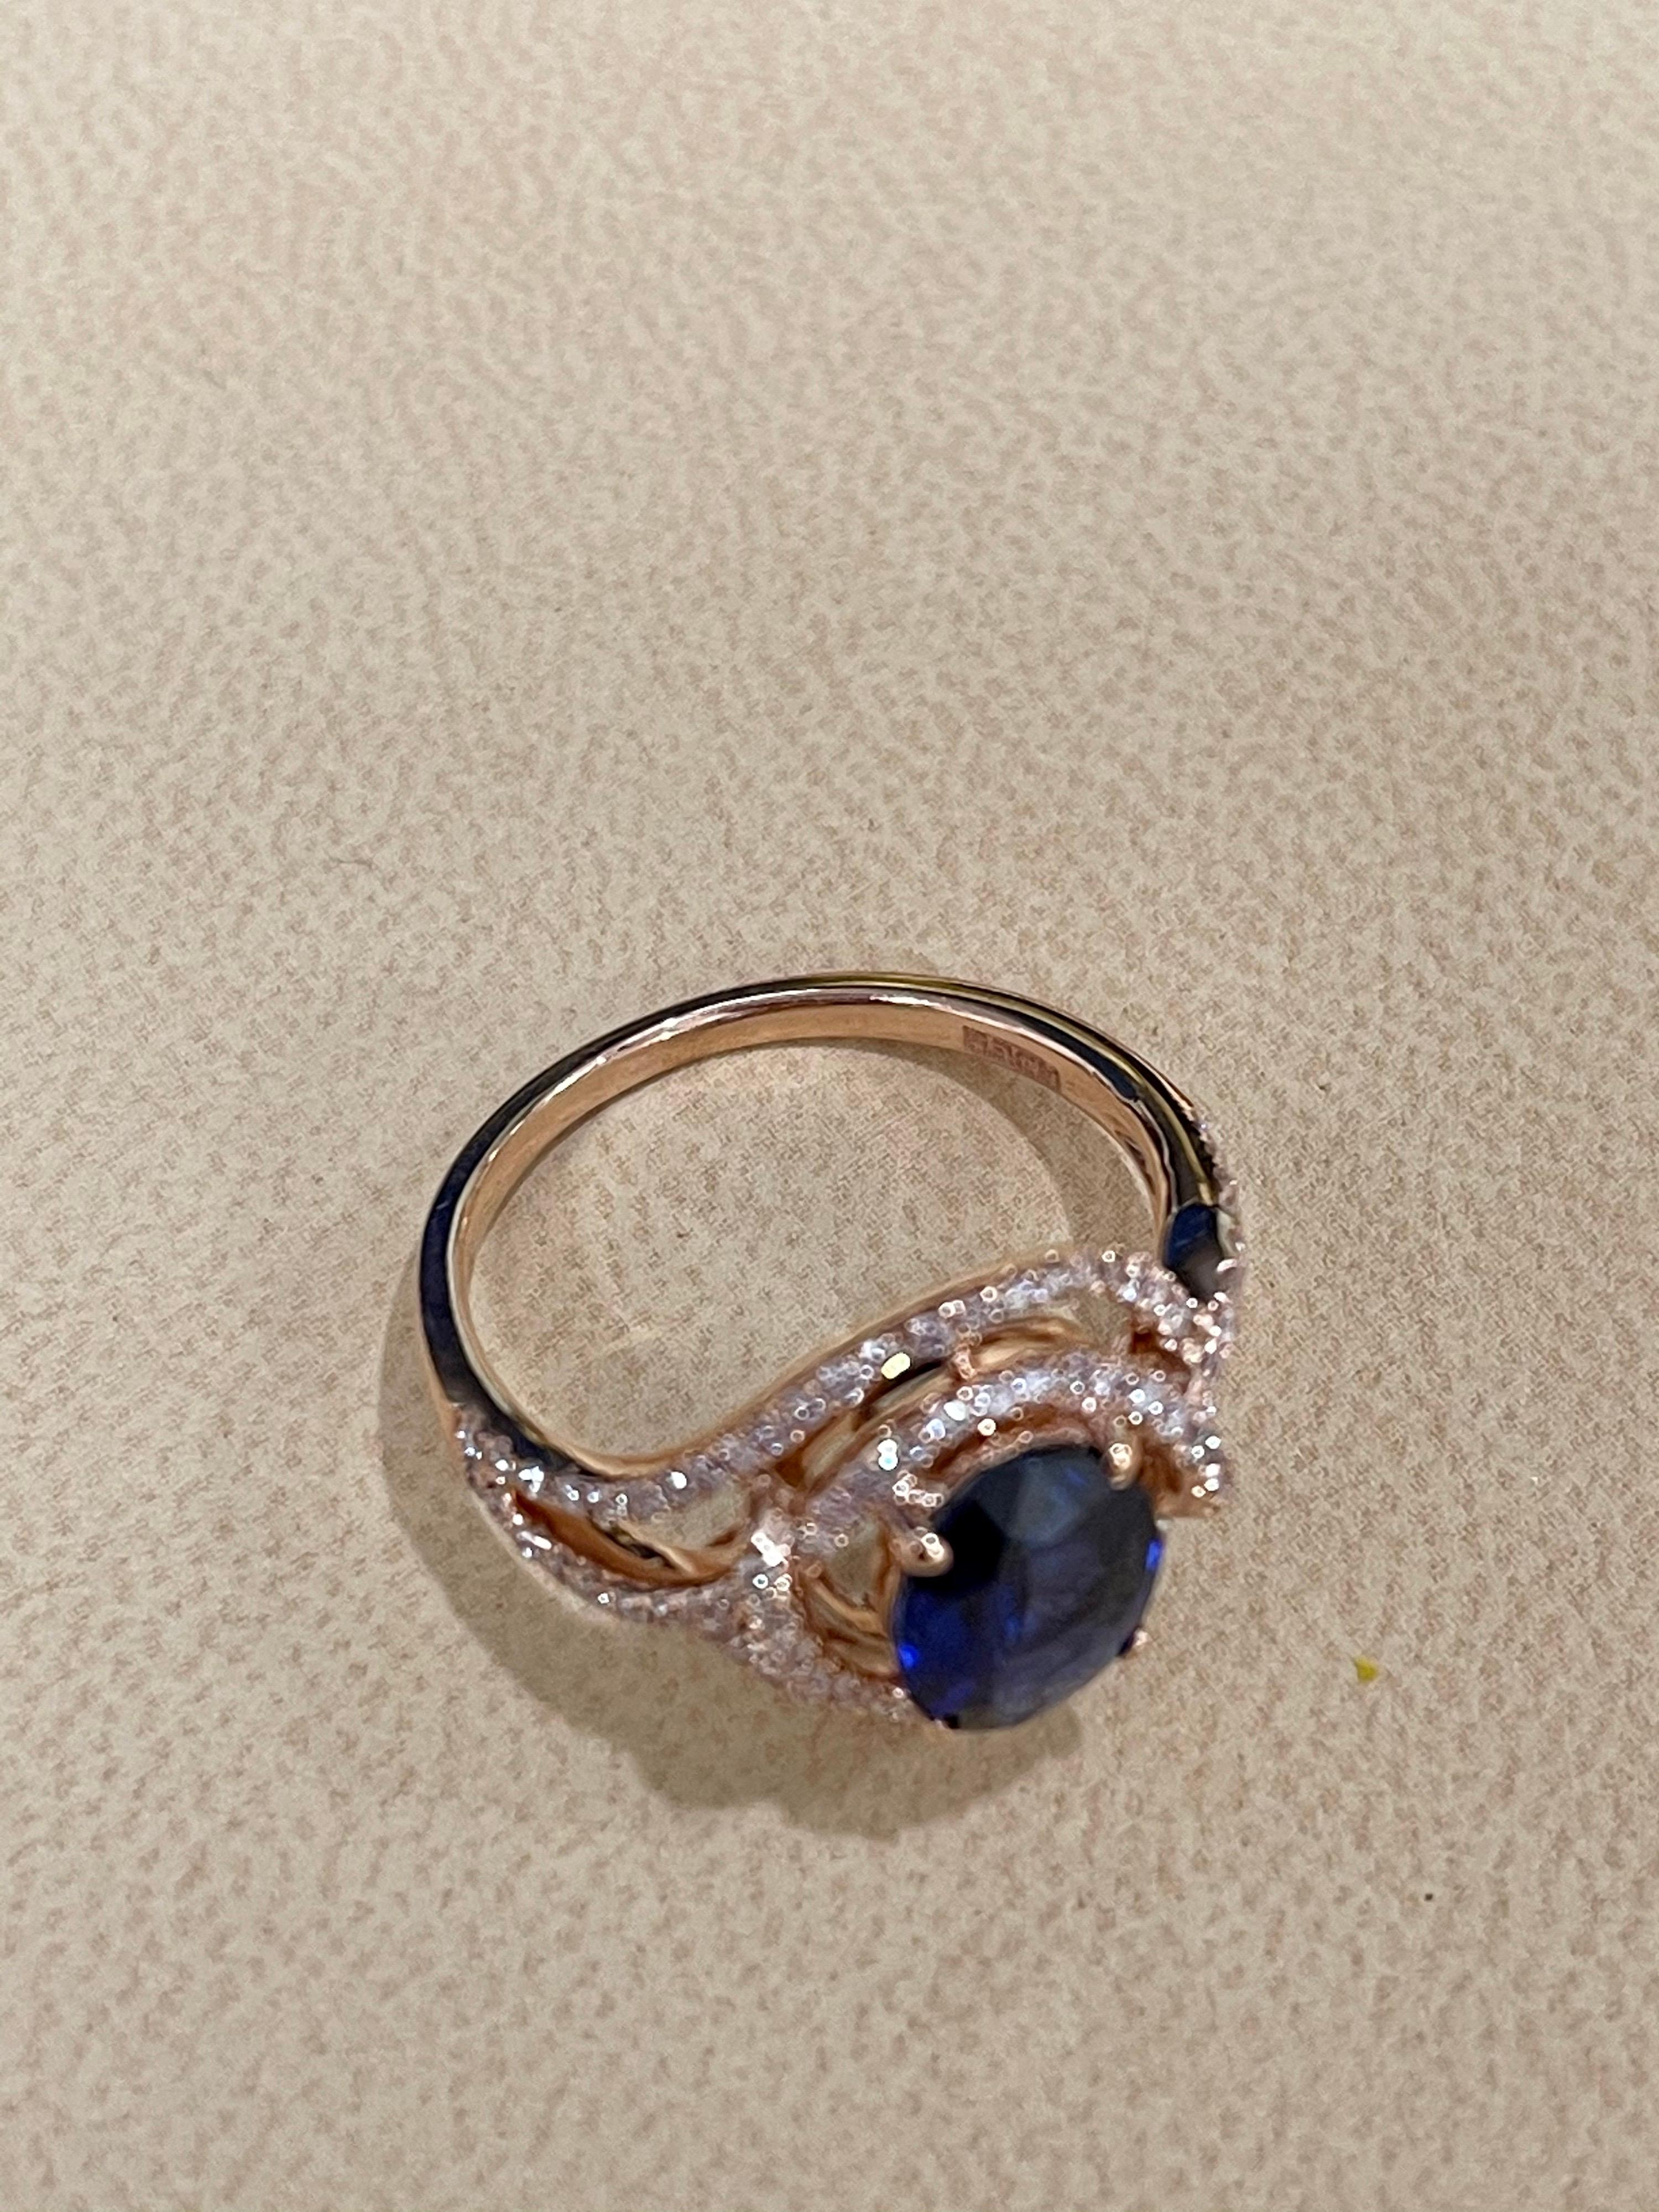 Oval Cut Effy's 1.9 Ct Blue Sapphire & 0.45 Carat Diamond Cocktail Ring in 14 Karat Gold